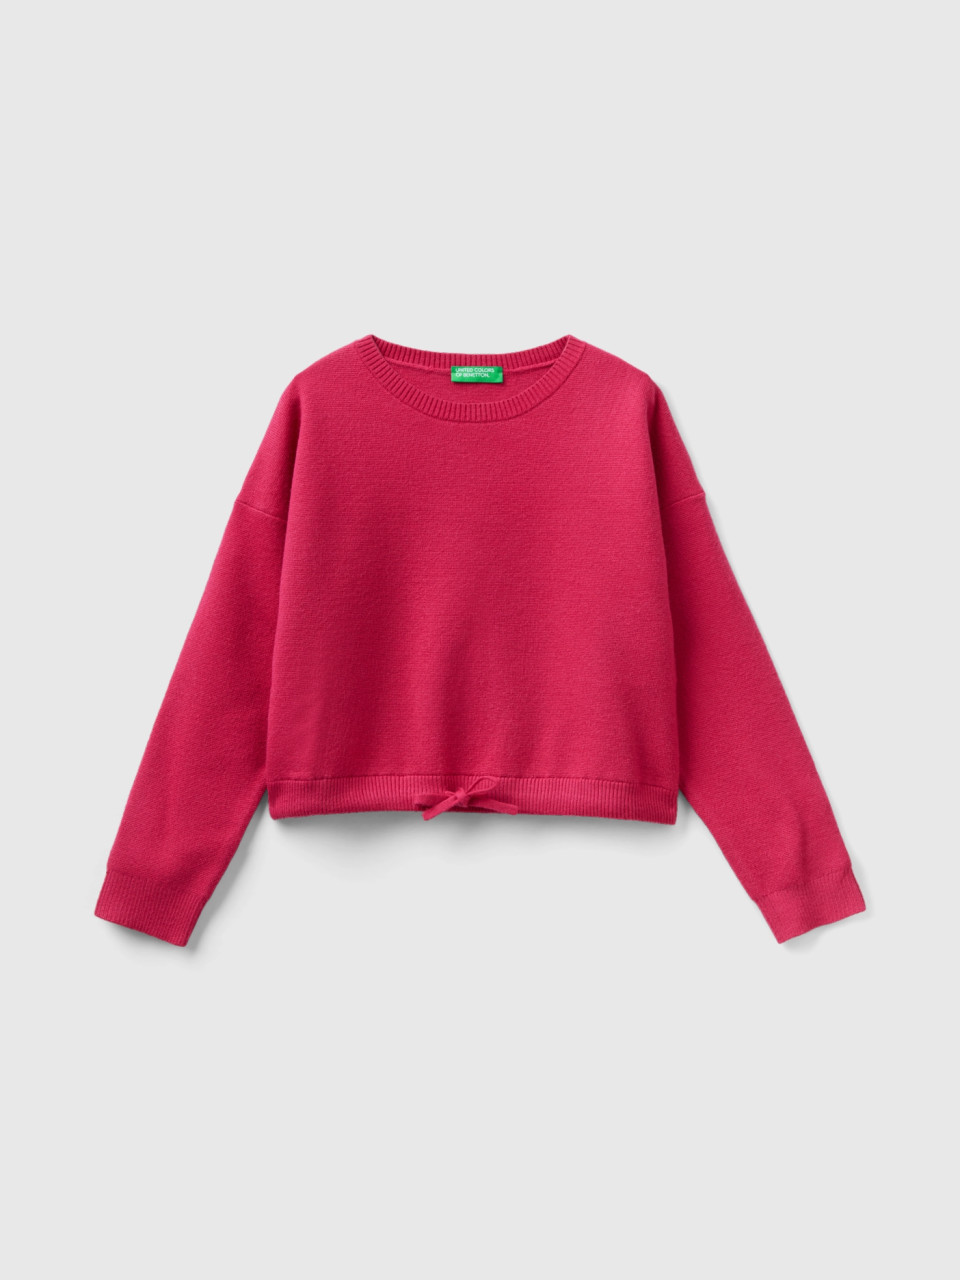 Benetton, Sweater With Drawstring, Cyclamen, Kids